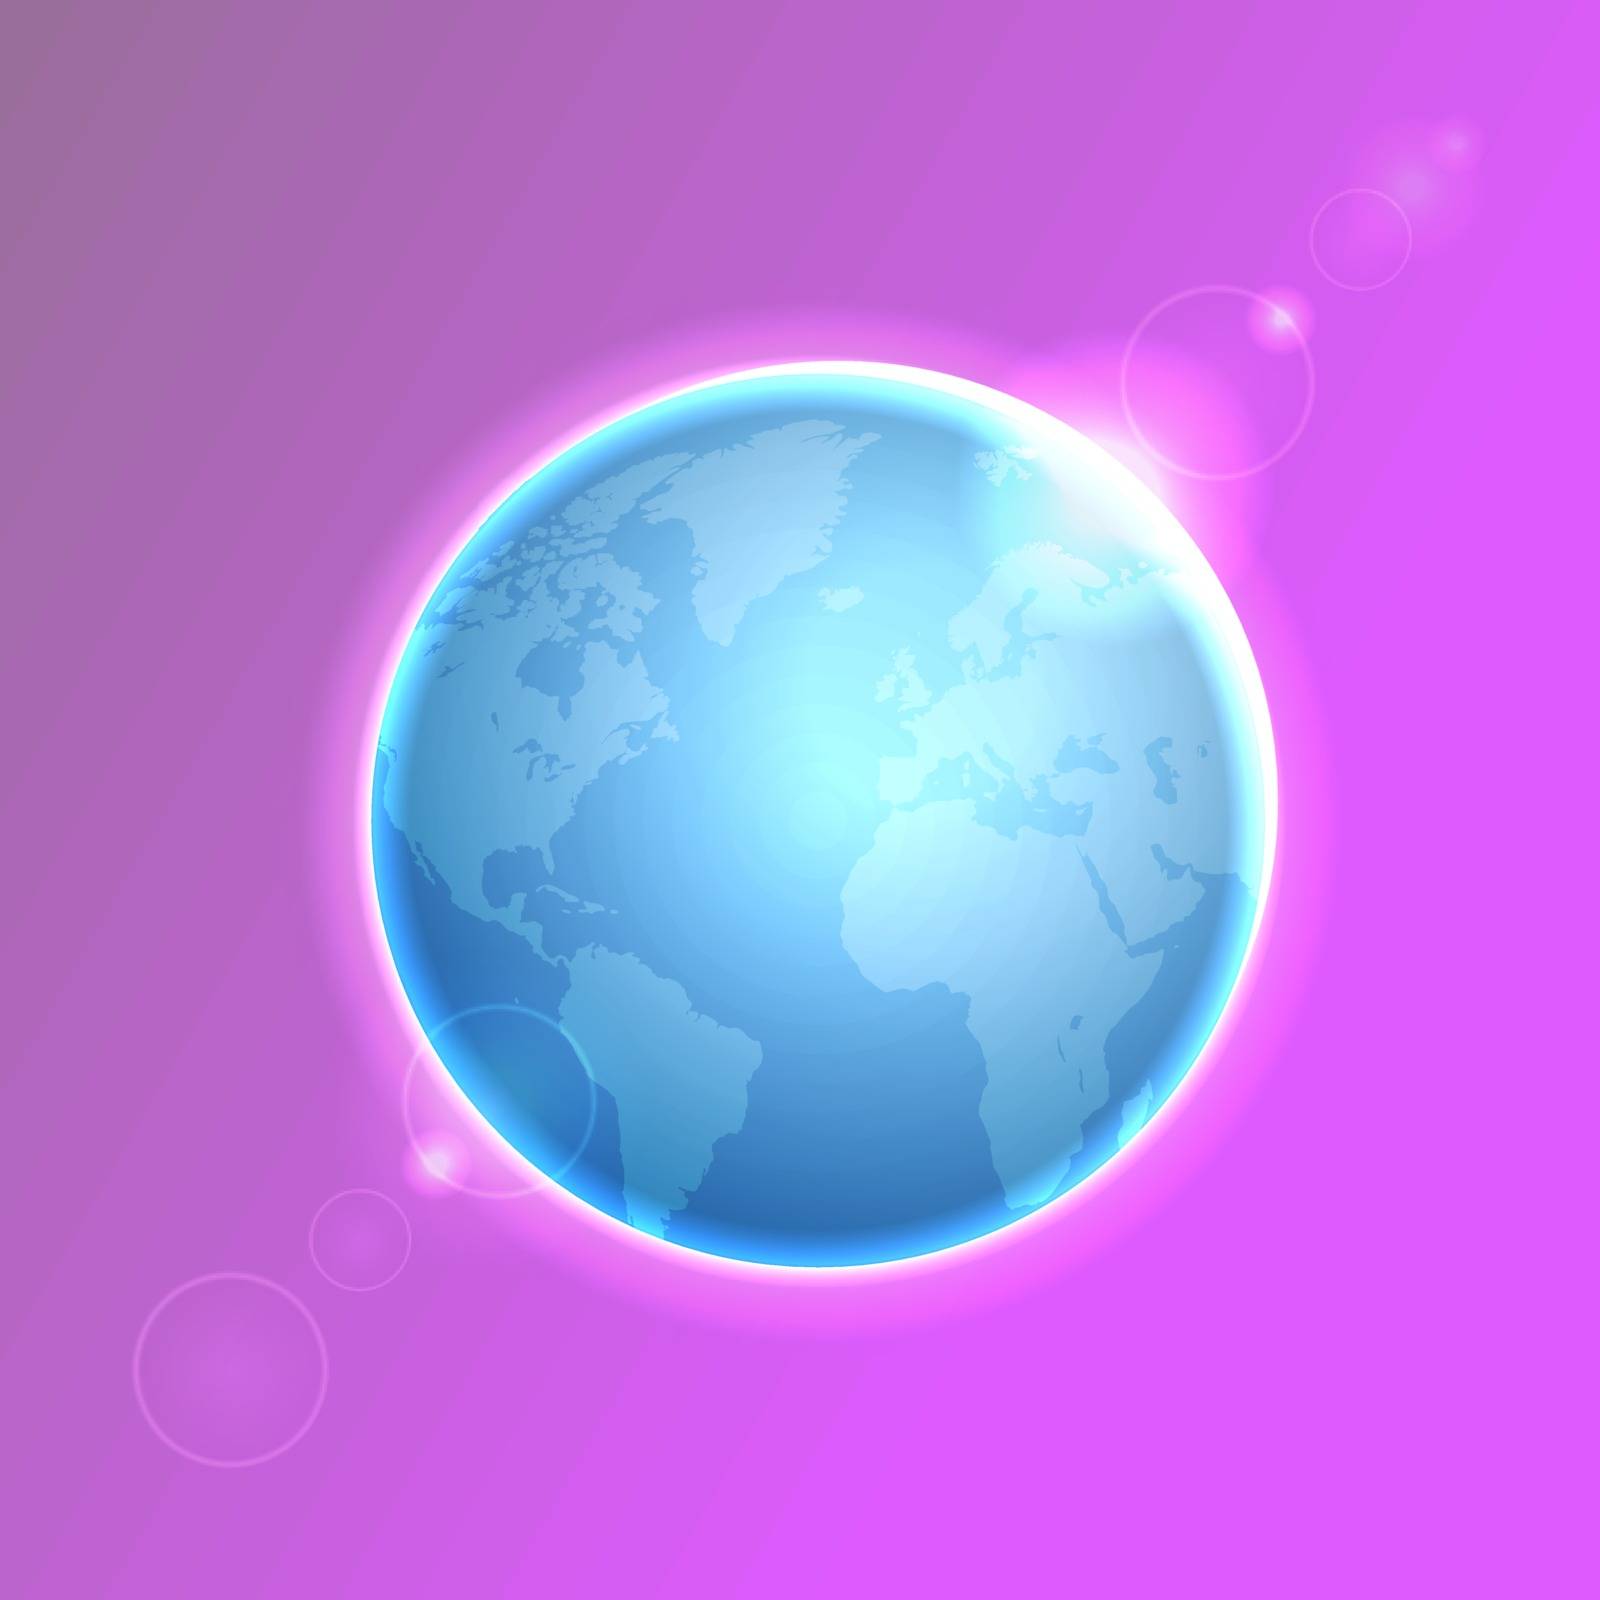 Planet Earth on colorful defocused lights bokeh background. Vector illustration.